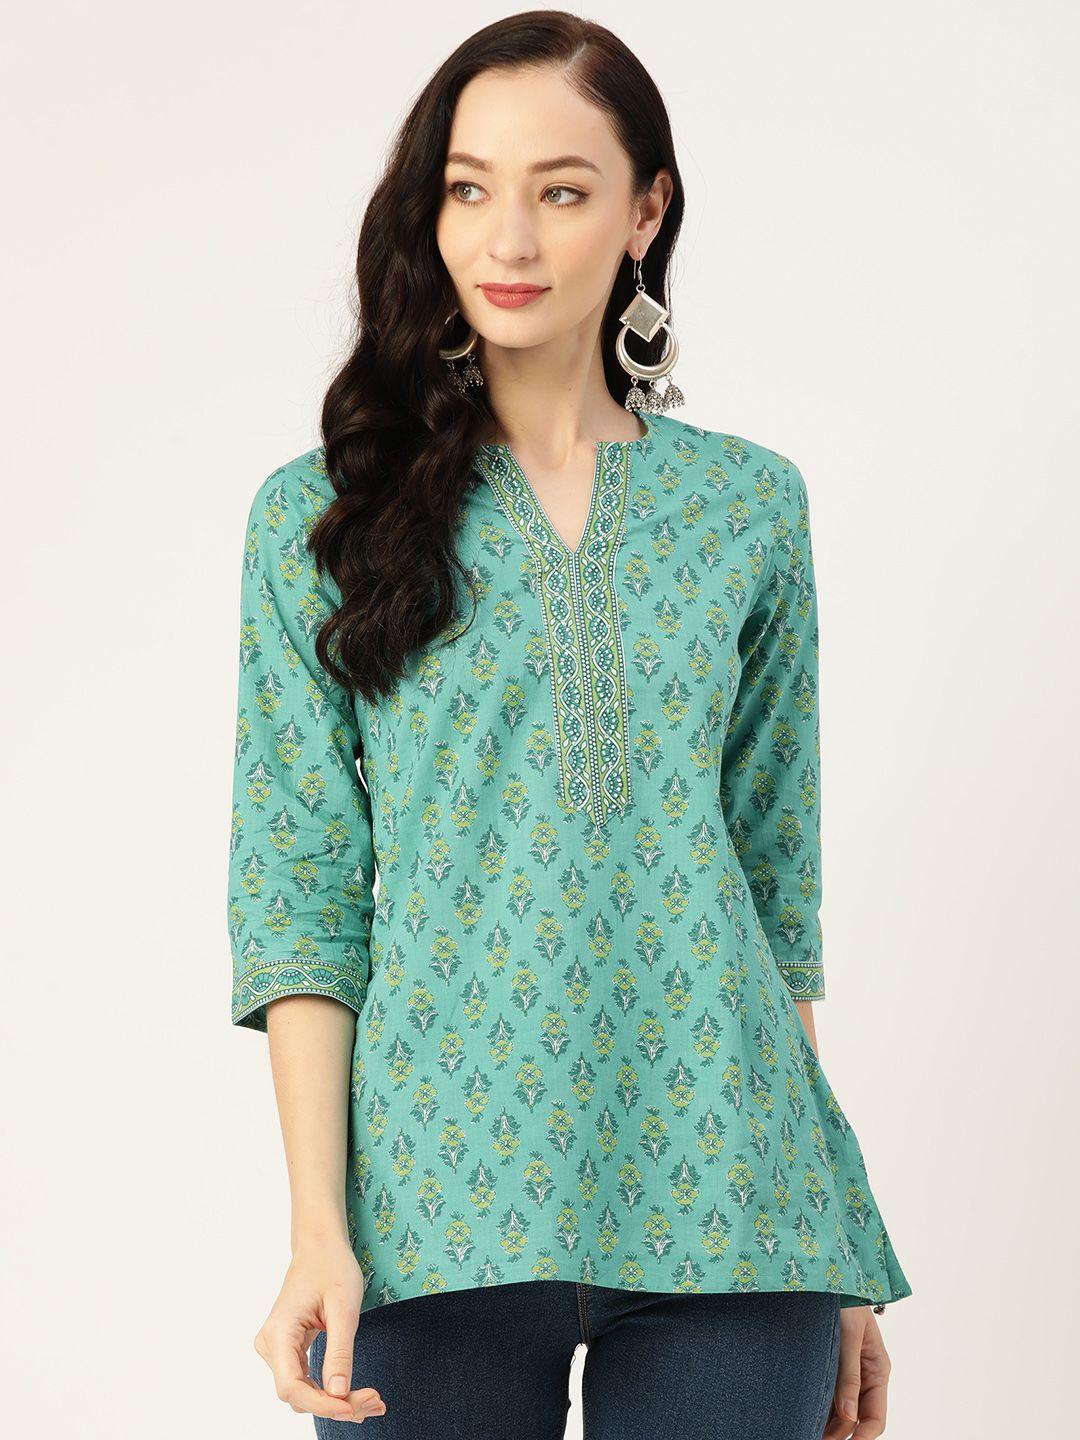 jaipur morni ethnic motifs print pure cotton regular ethnic top